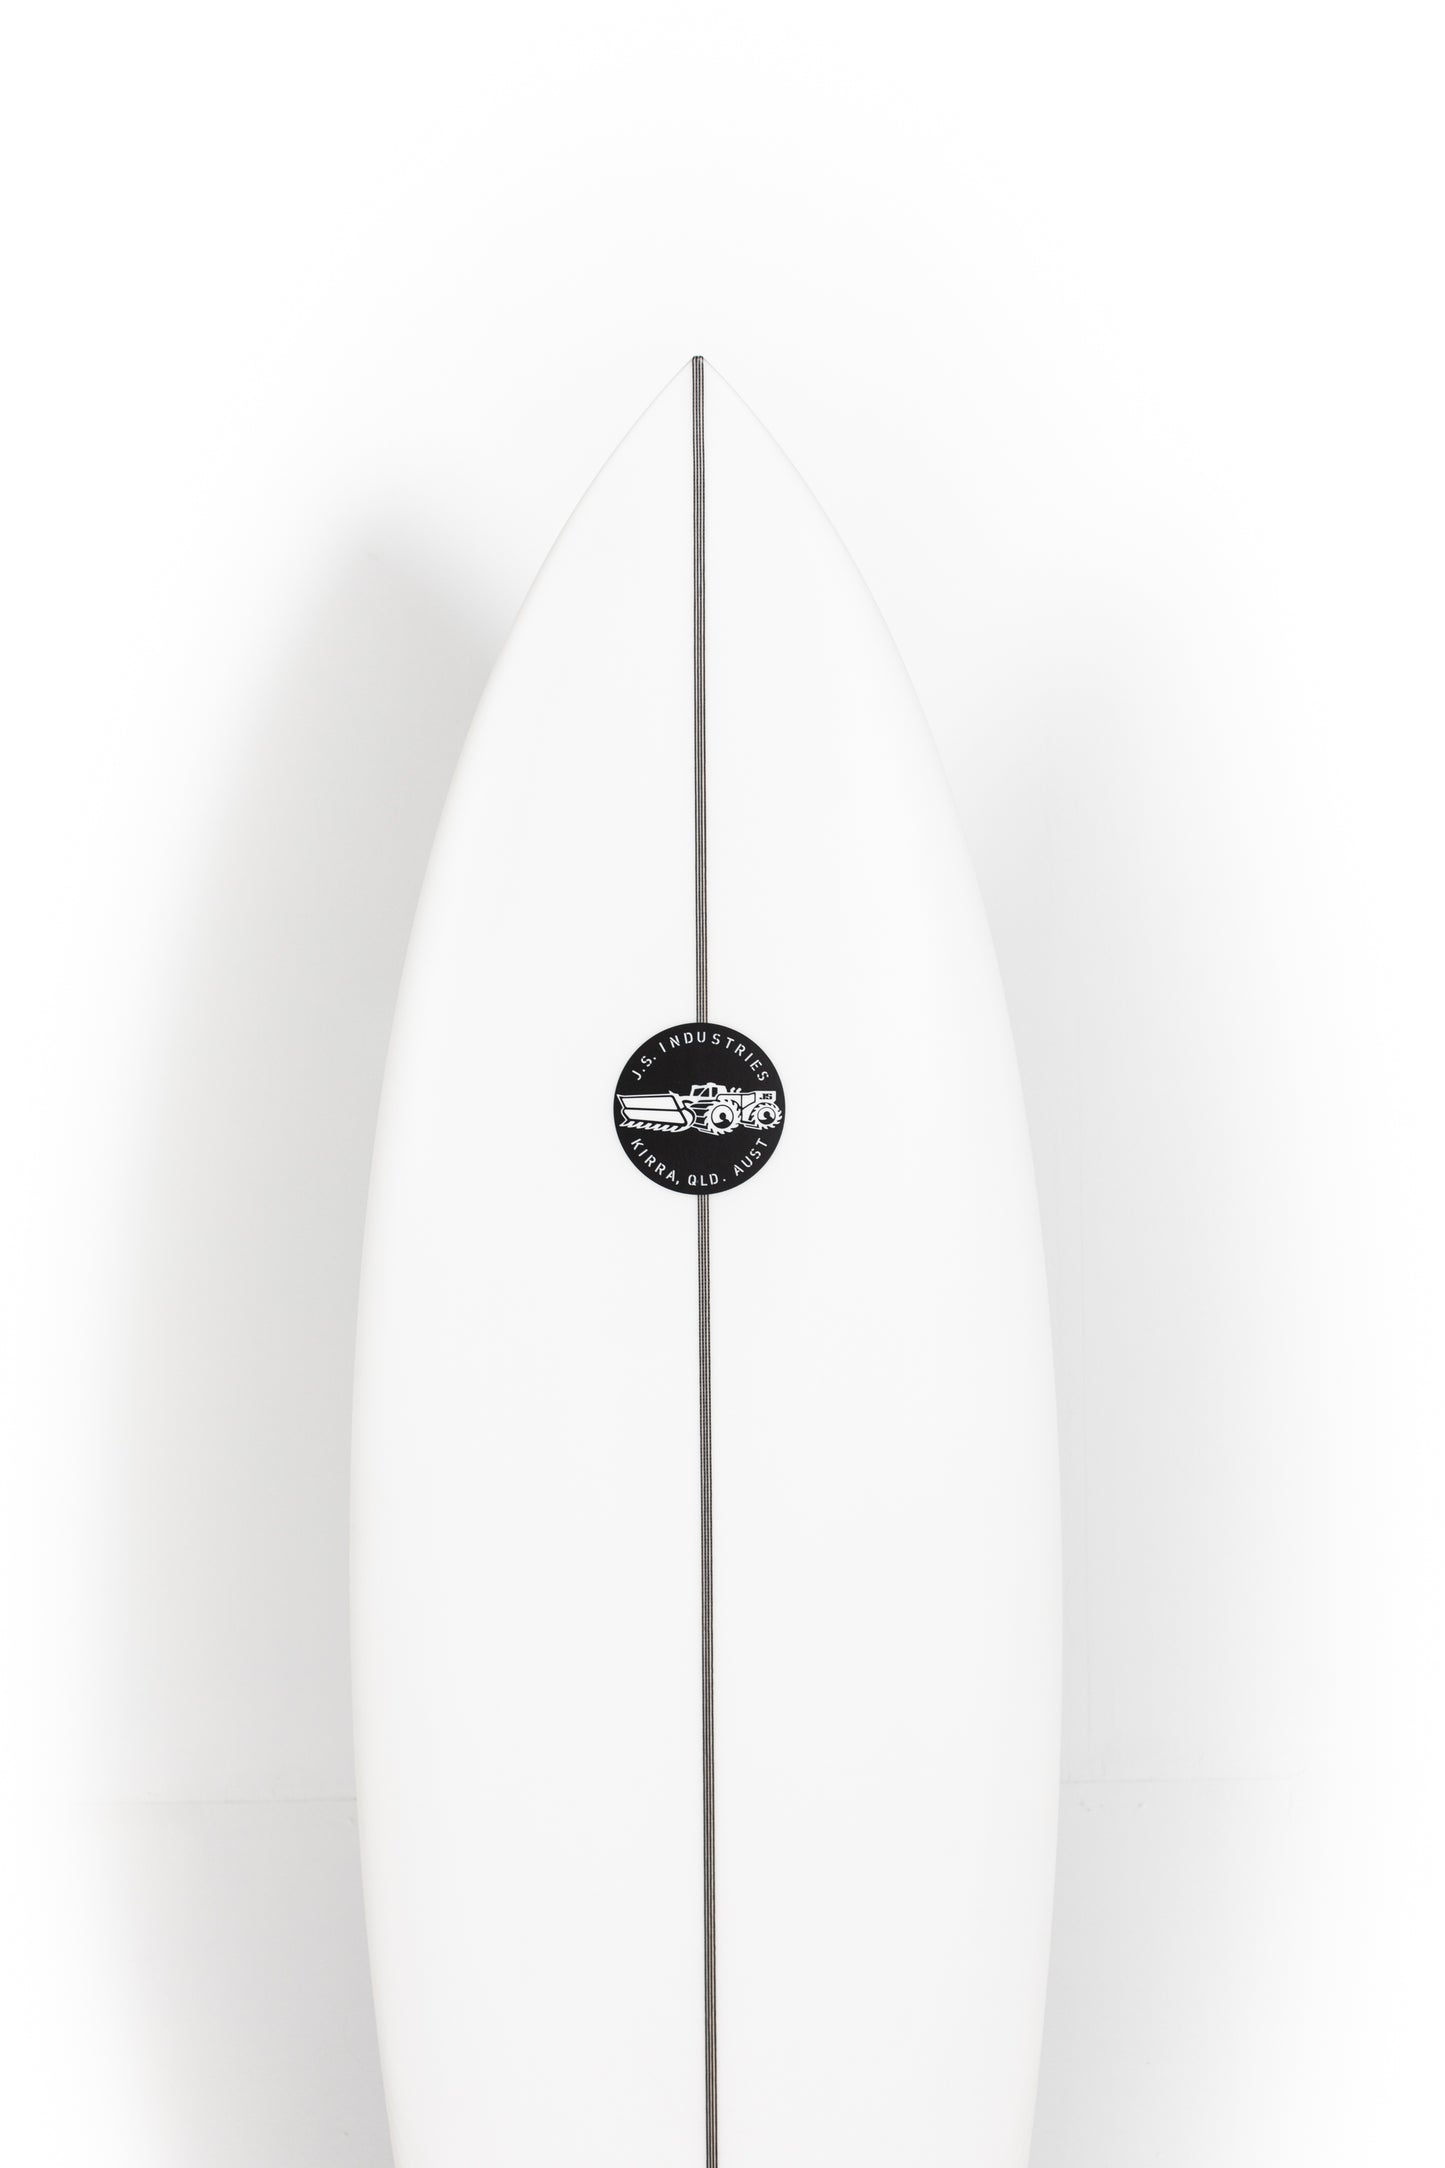 
                  
                    Pukas Surf Shop - JS Surfboards - BLACK BARON 2.1 - 5'7" x 19,25 x 2,56 x 28,10L - BLACKBARON2.1
                  
                